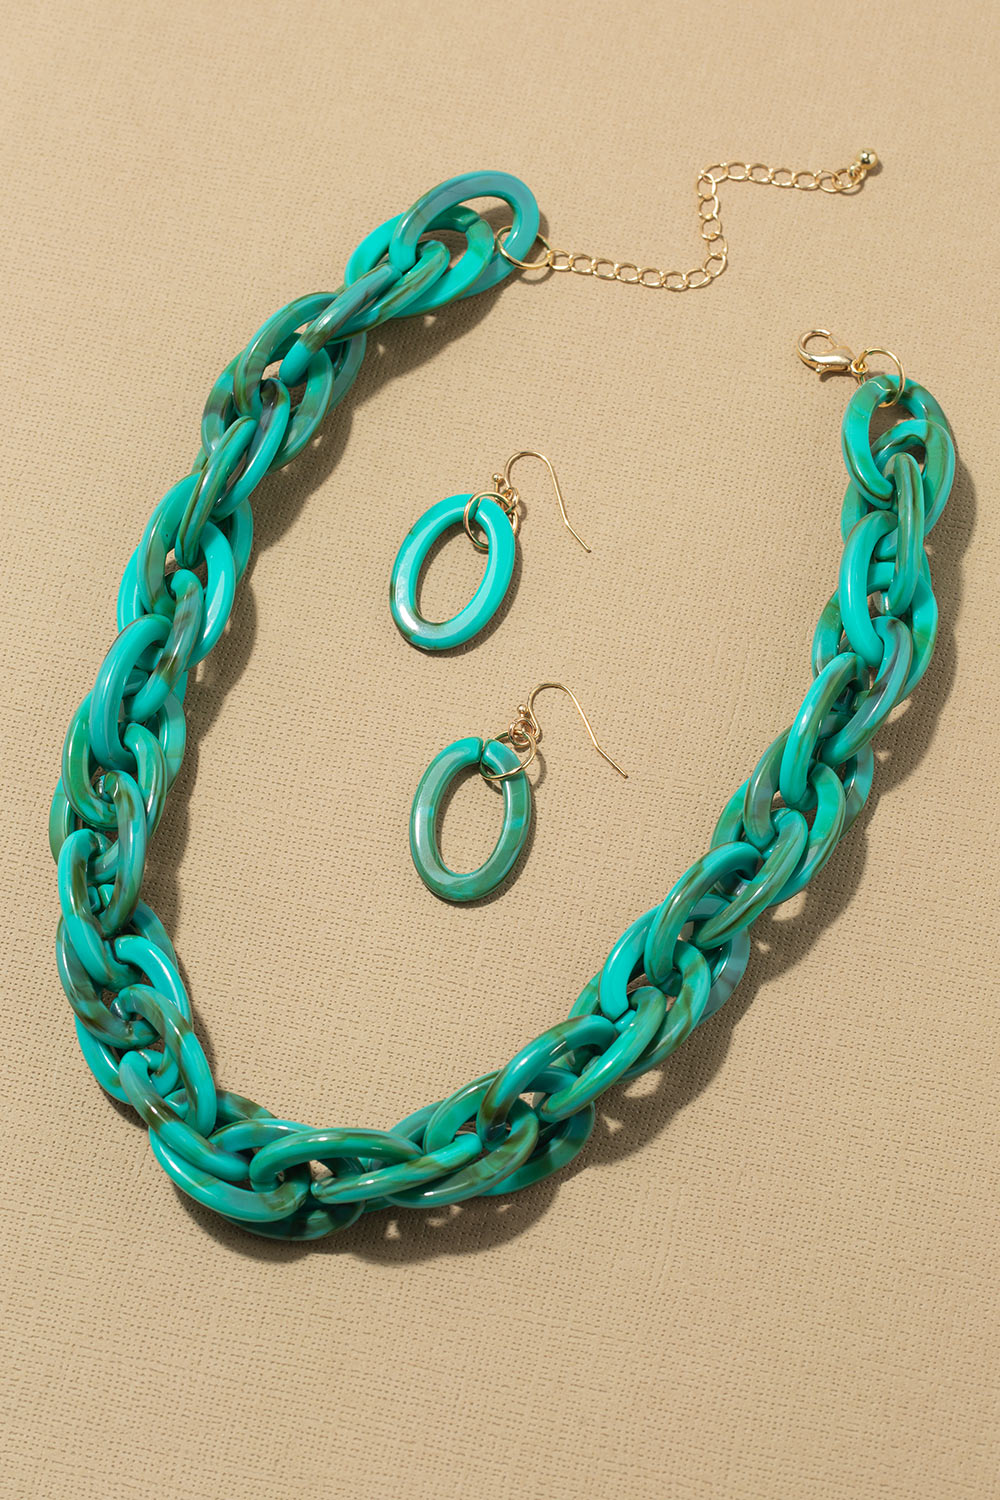 Type 3 Vibin' With Iris Necklace/Earring Set